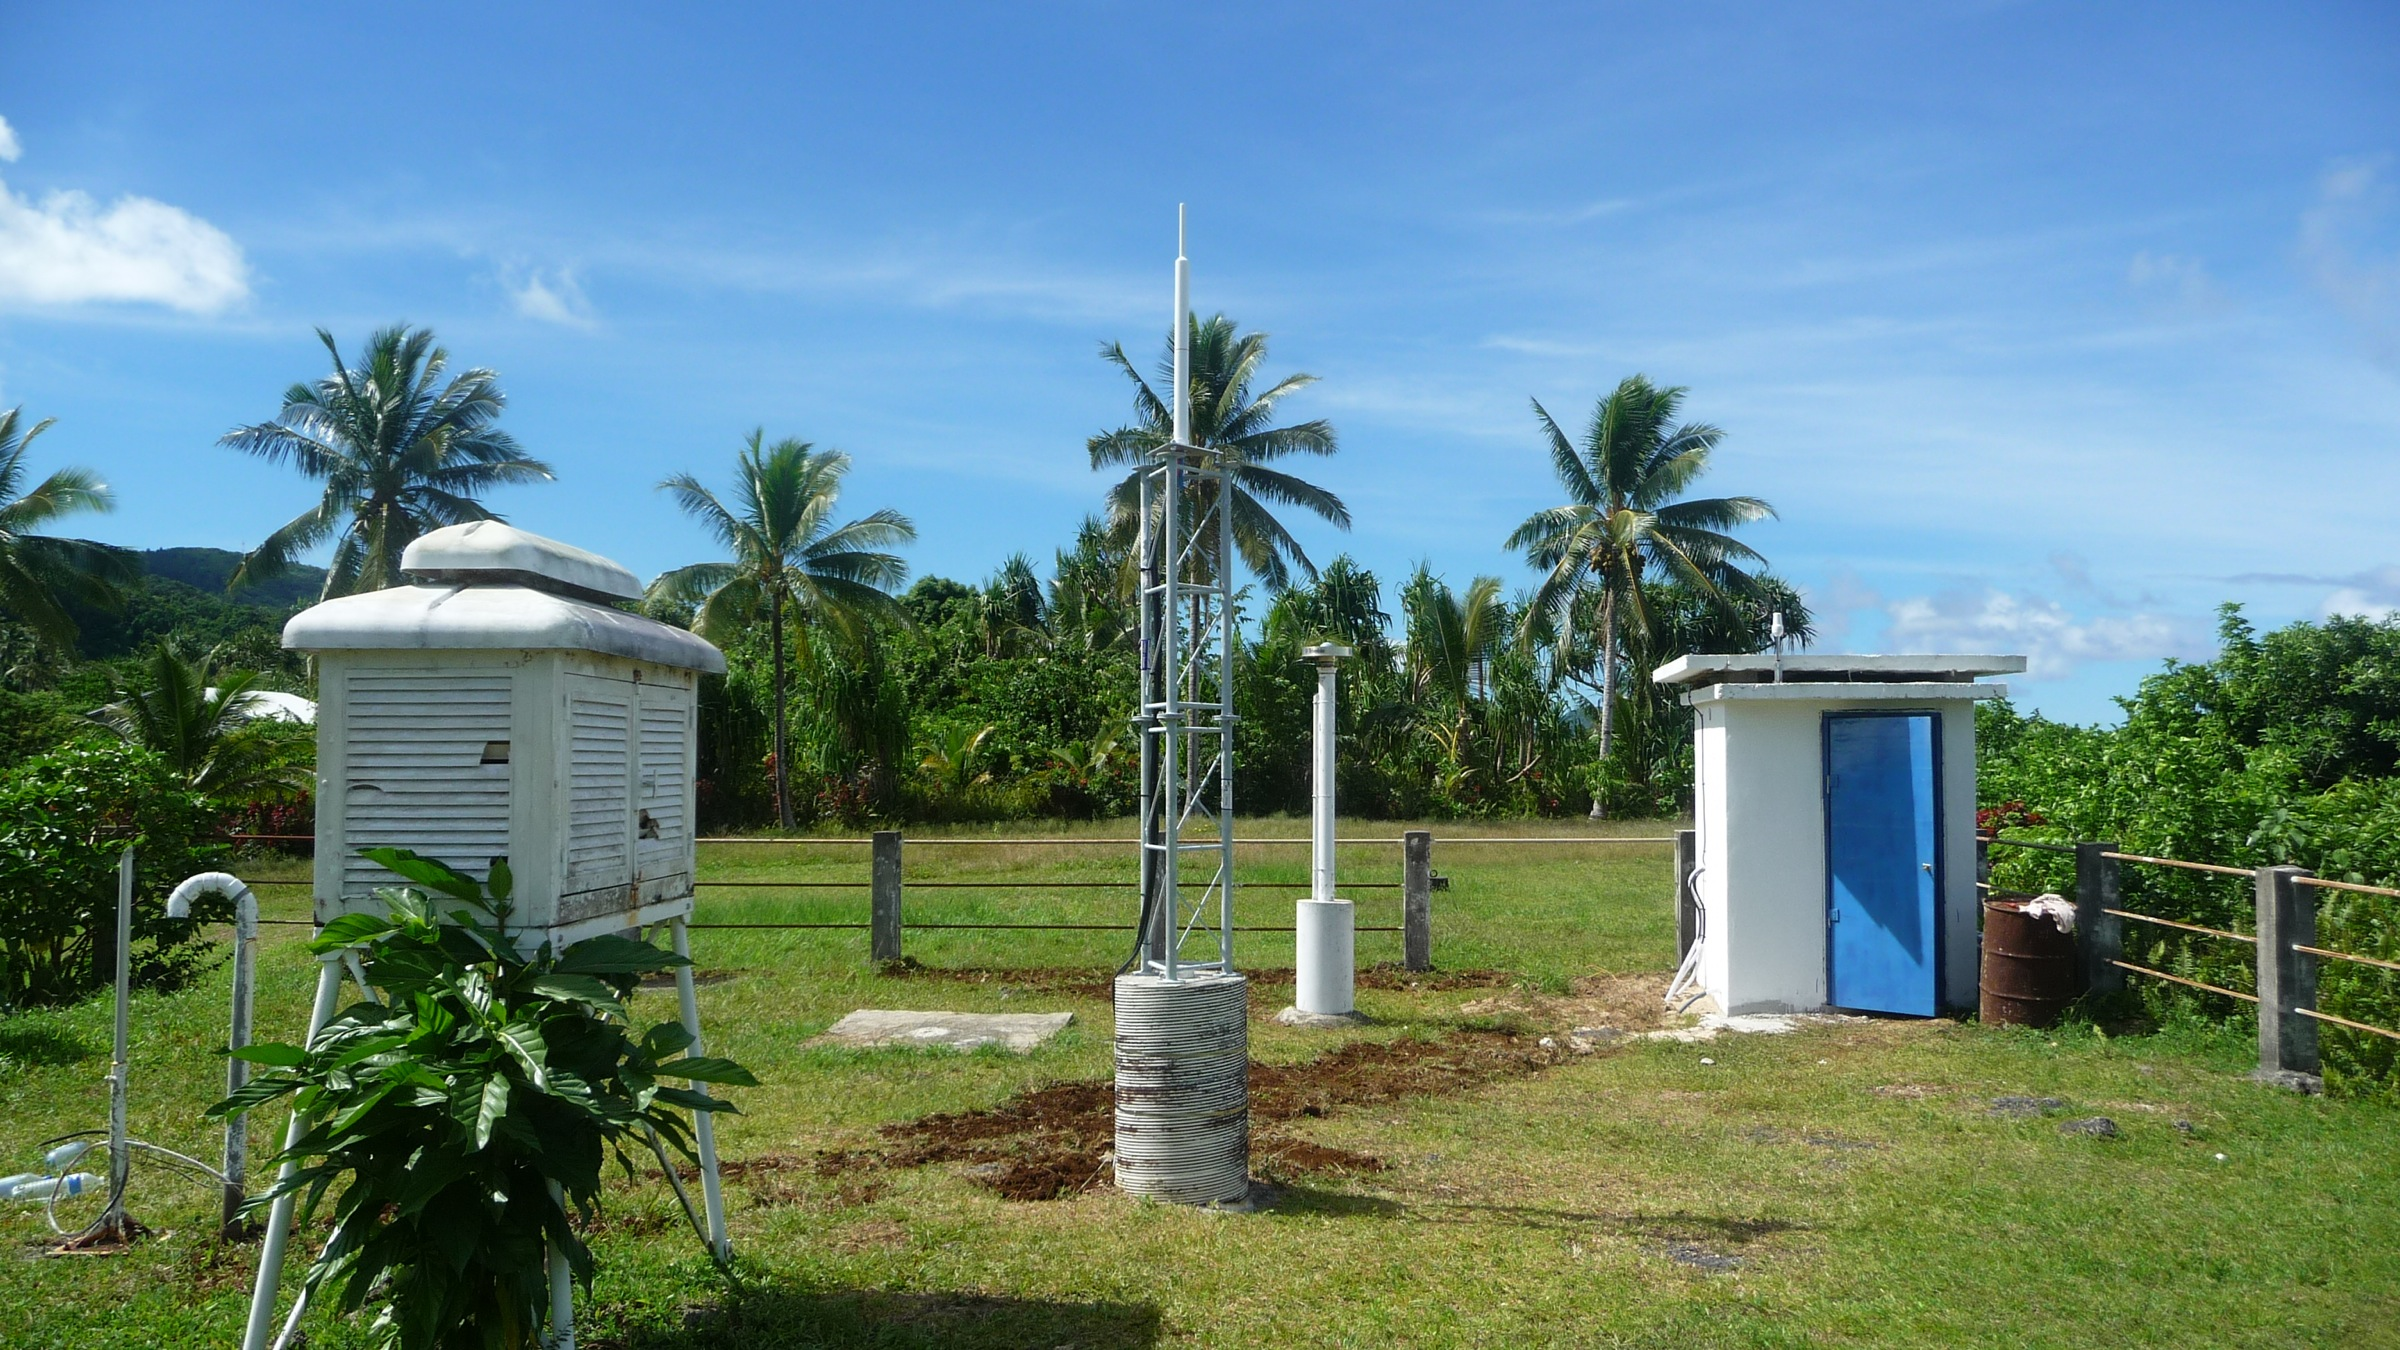 DORIS station: FUTUNA - FRANCE (Wallis and Futuna)